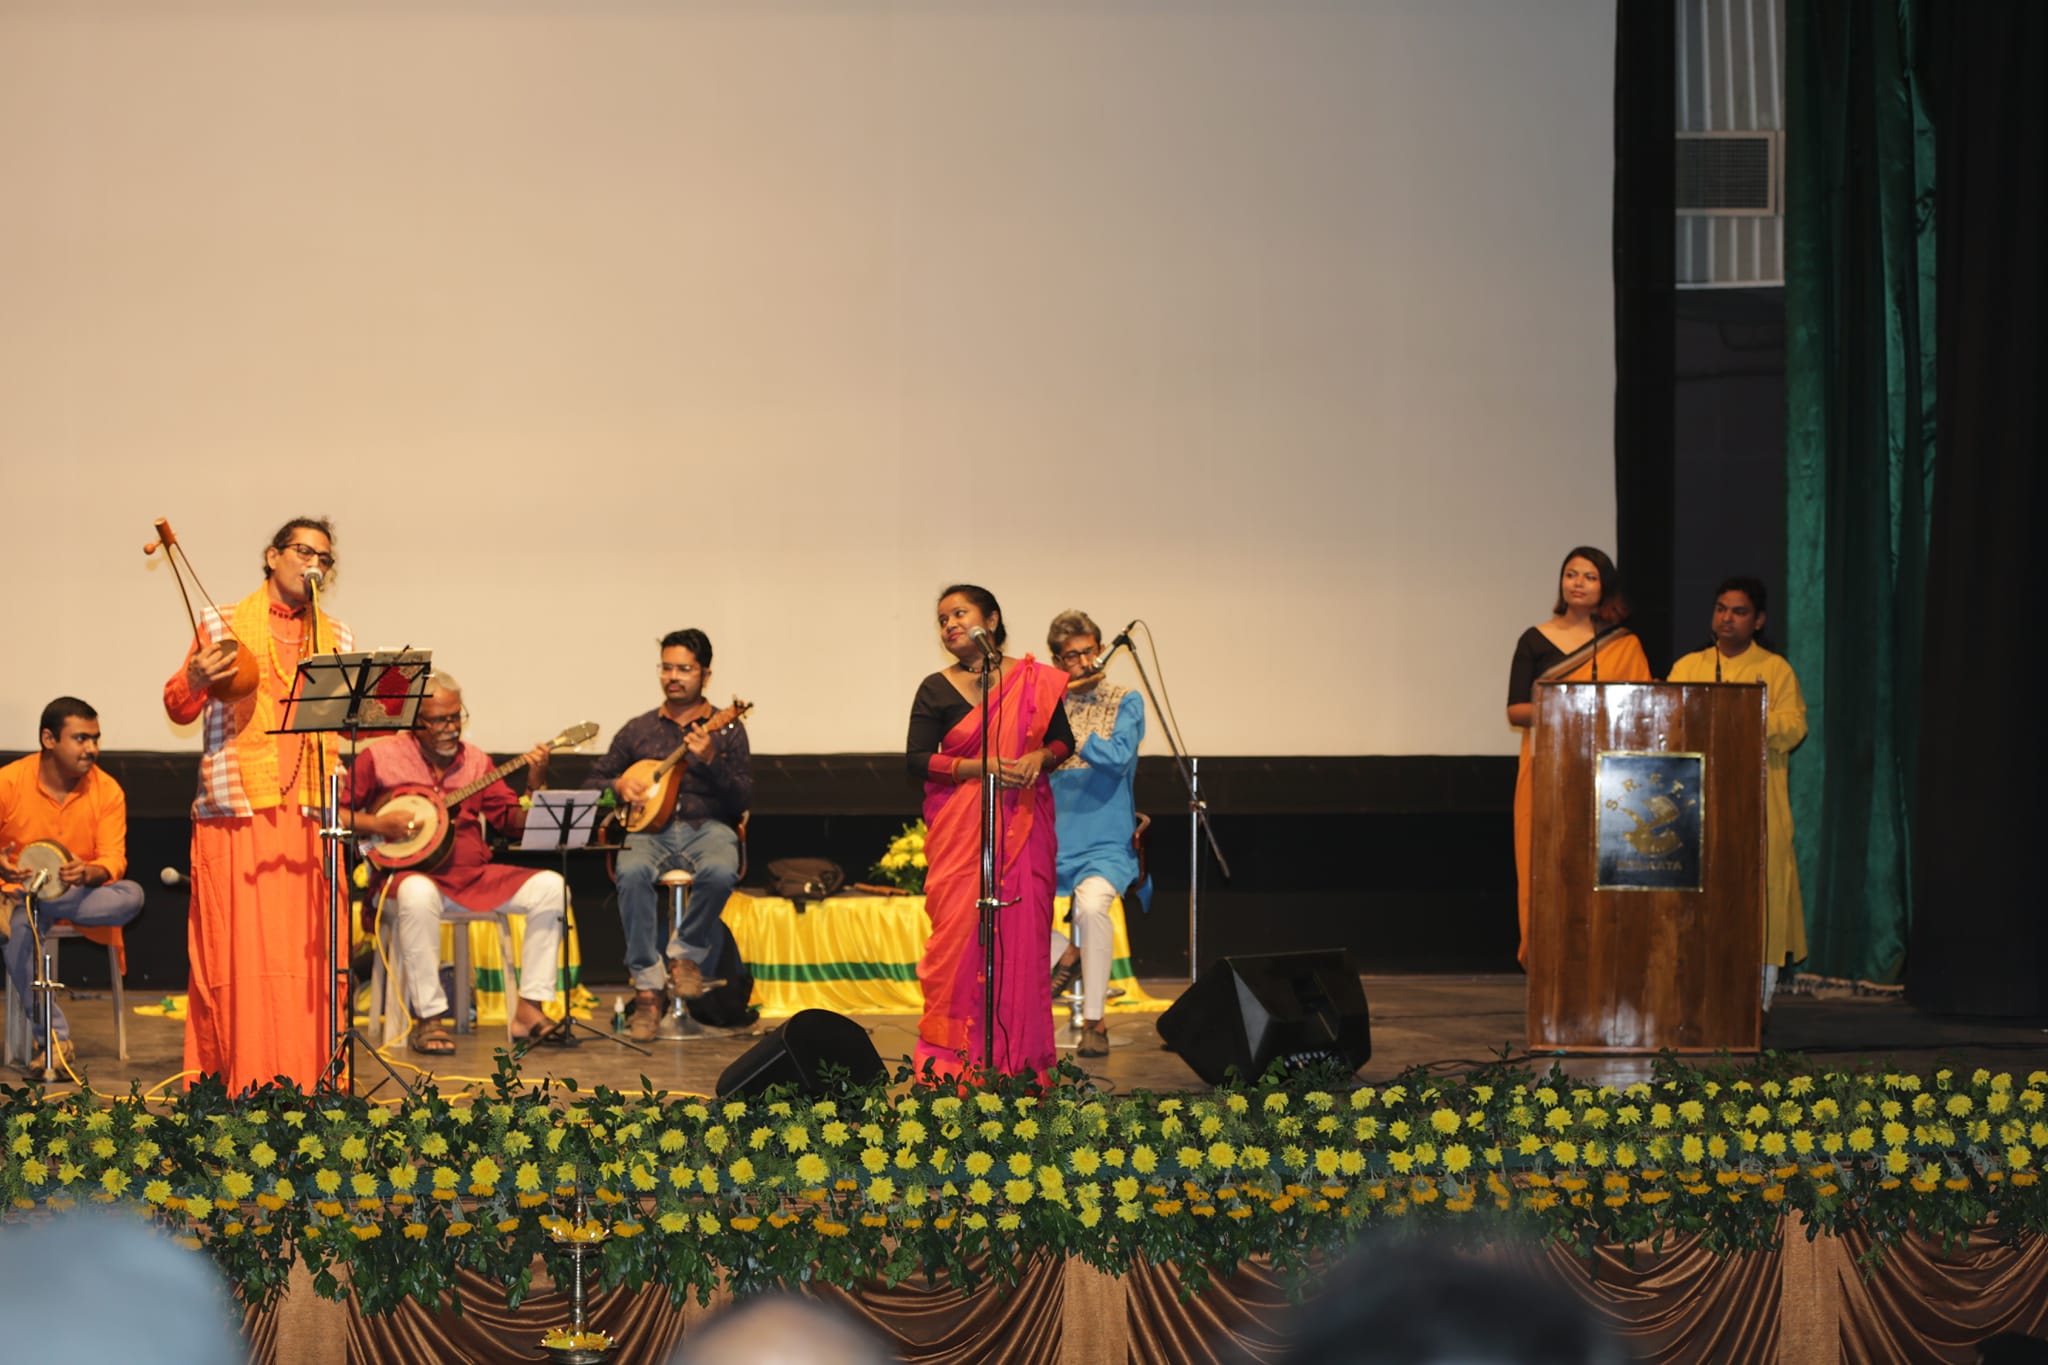 Musical performance by Kolkata kalling